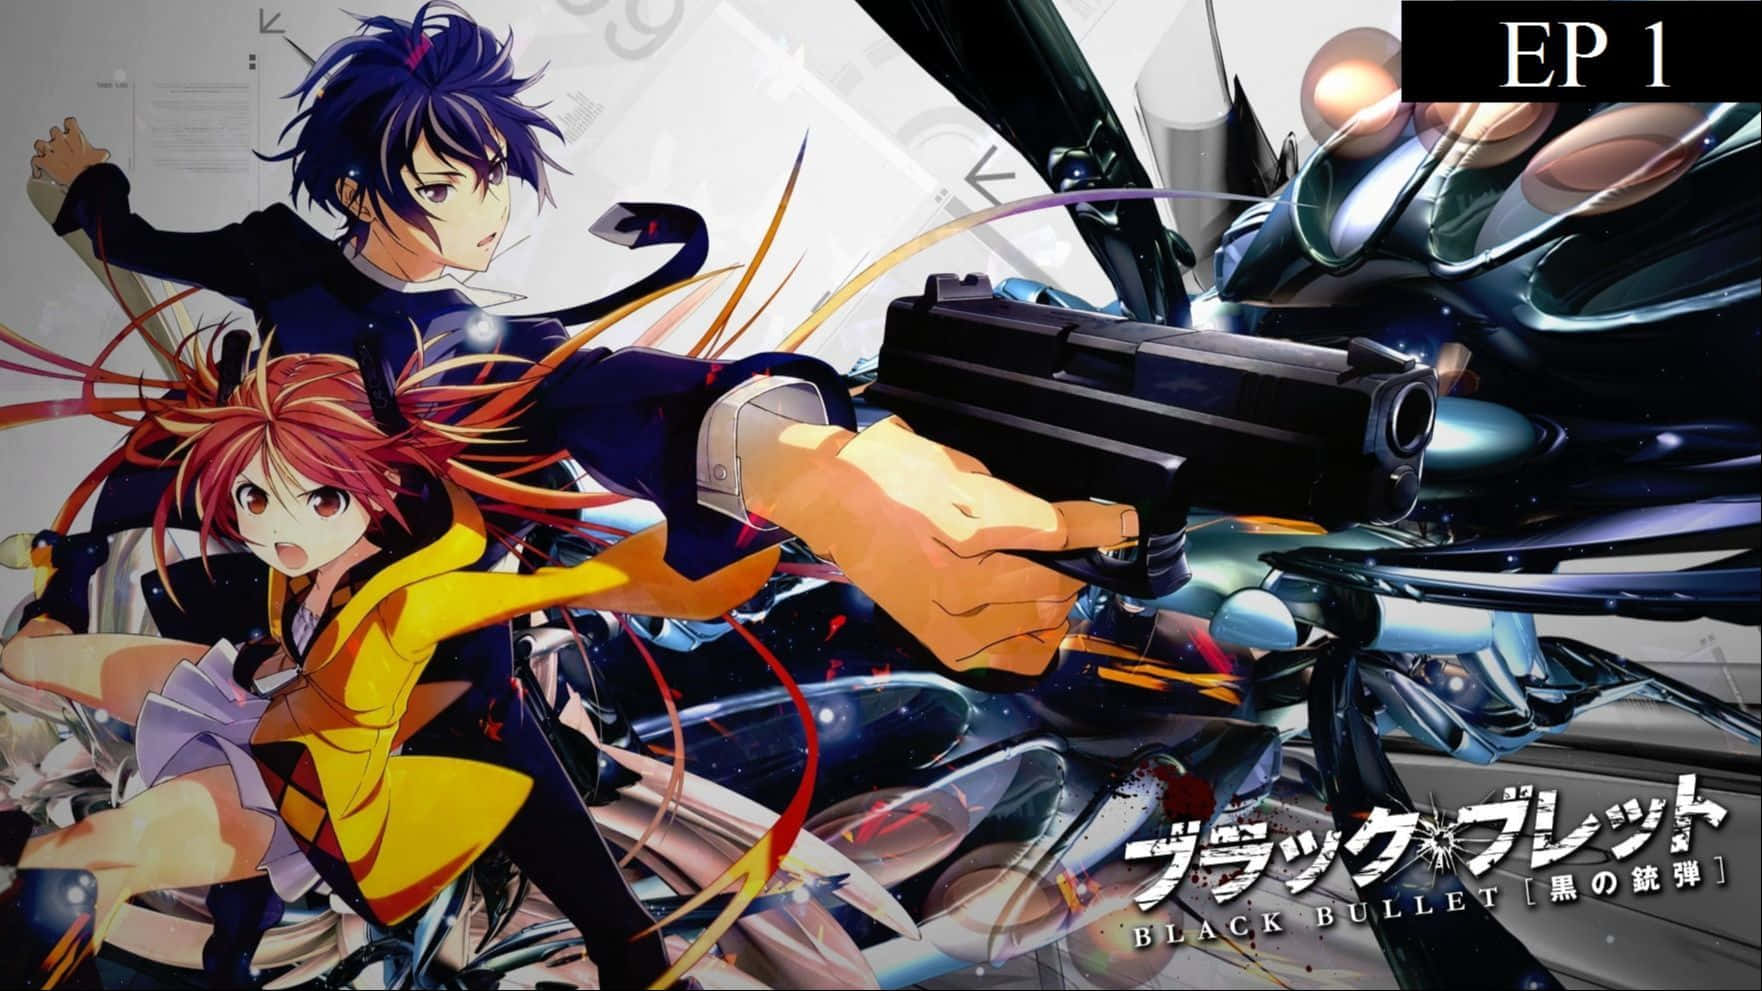 A Anime Character Holding A Gun